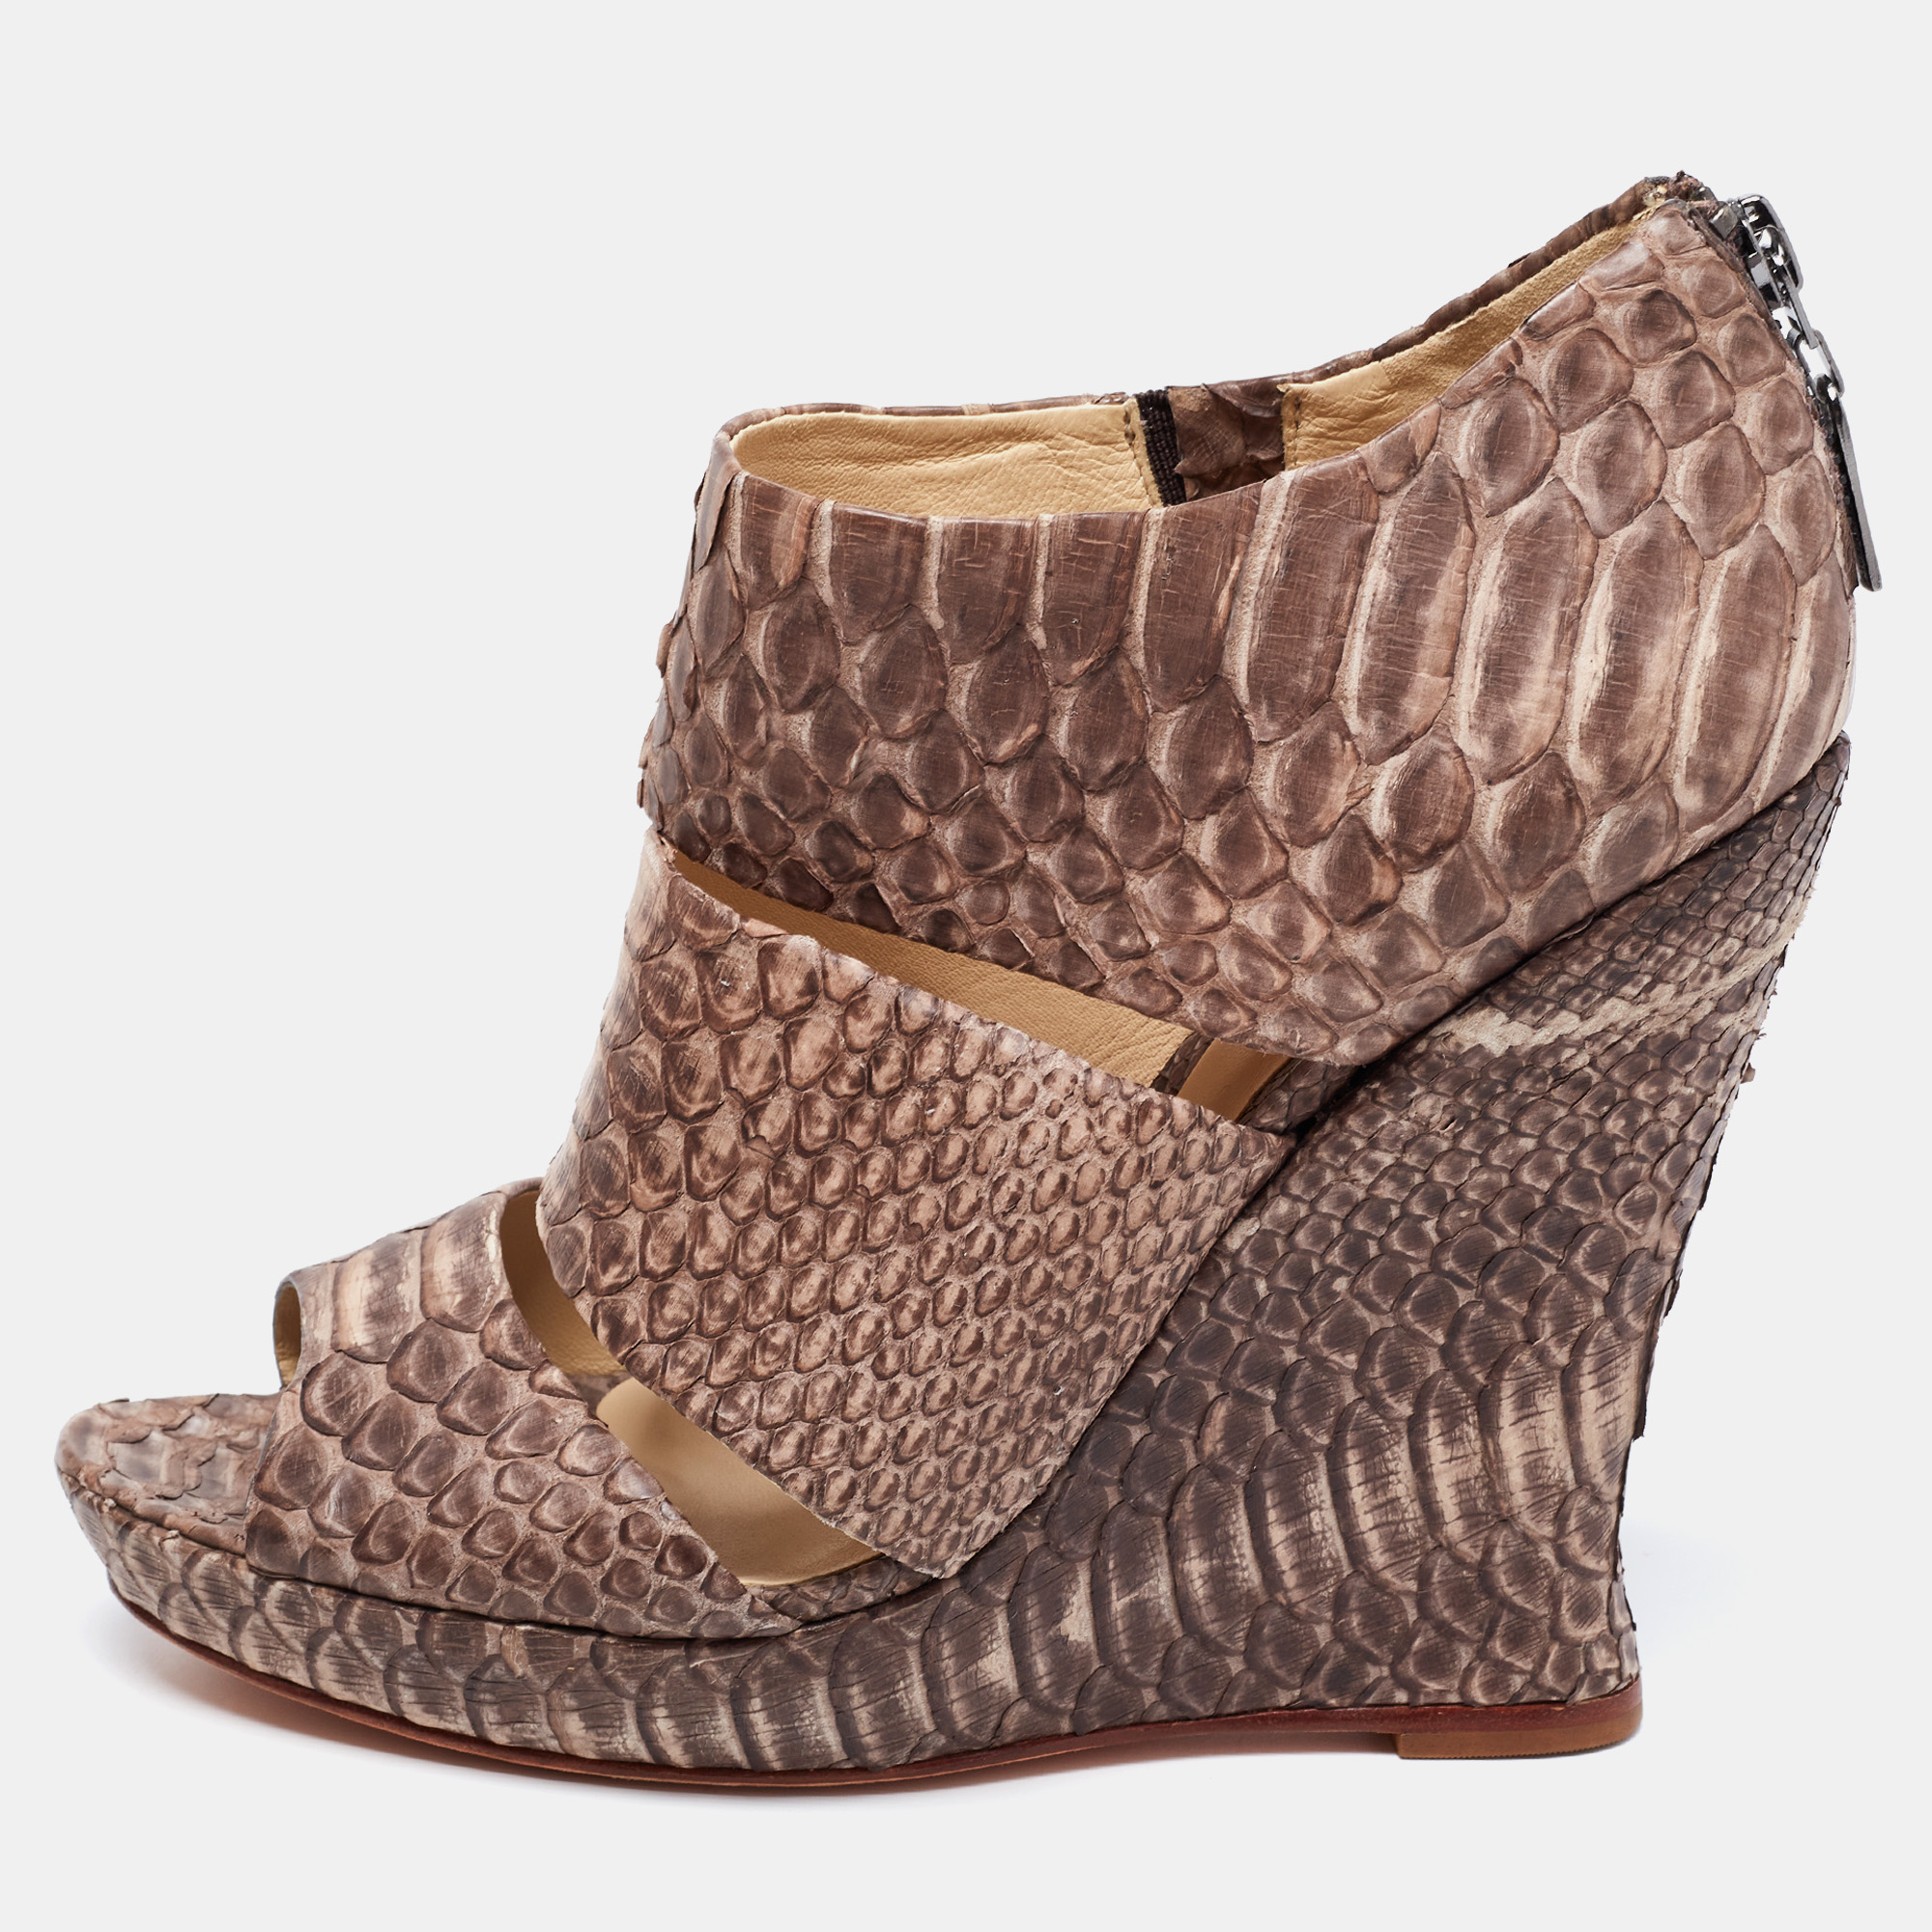 Alexandre birman two-tone python leather wedge sandals size 36